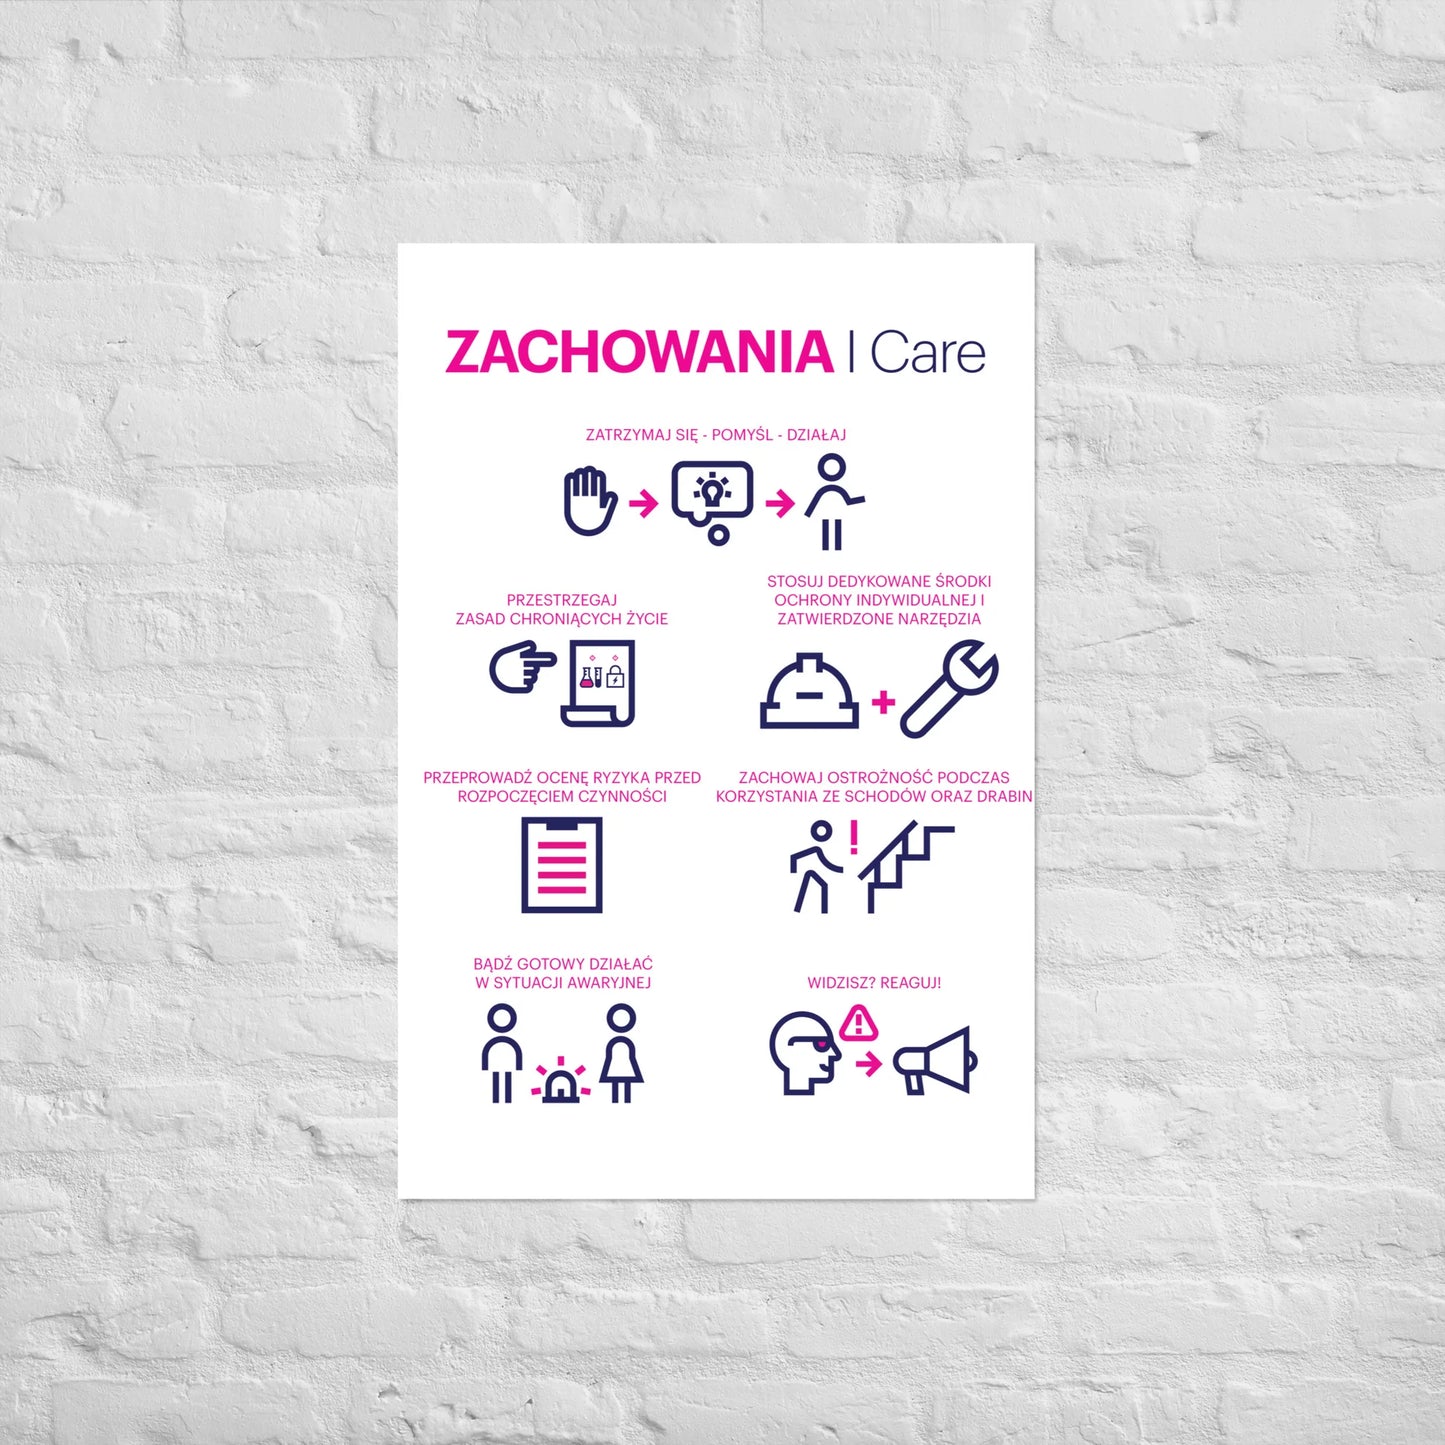 I Care Behaviors poster - download